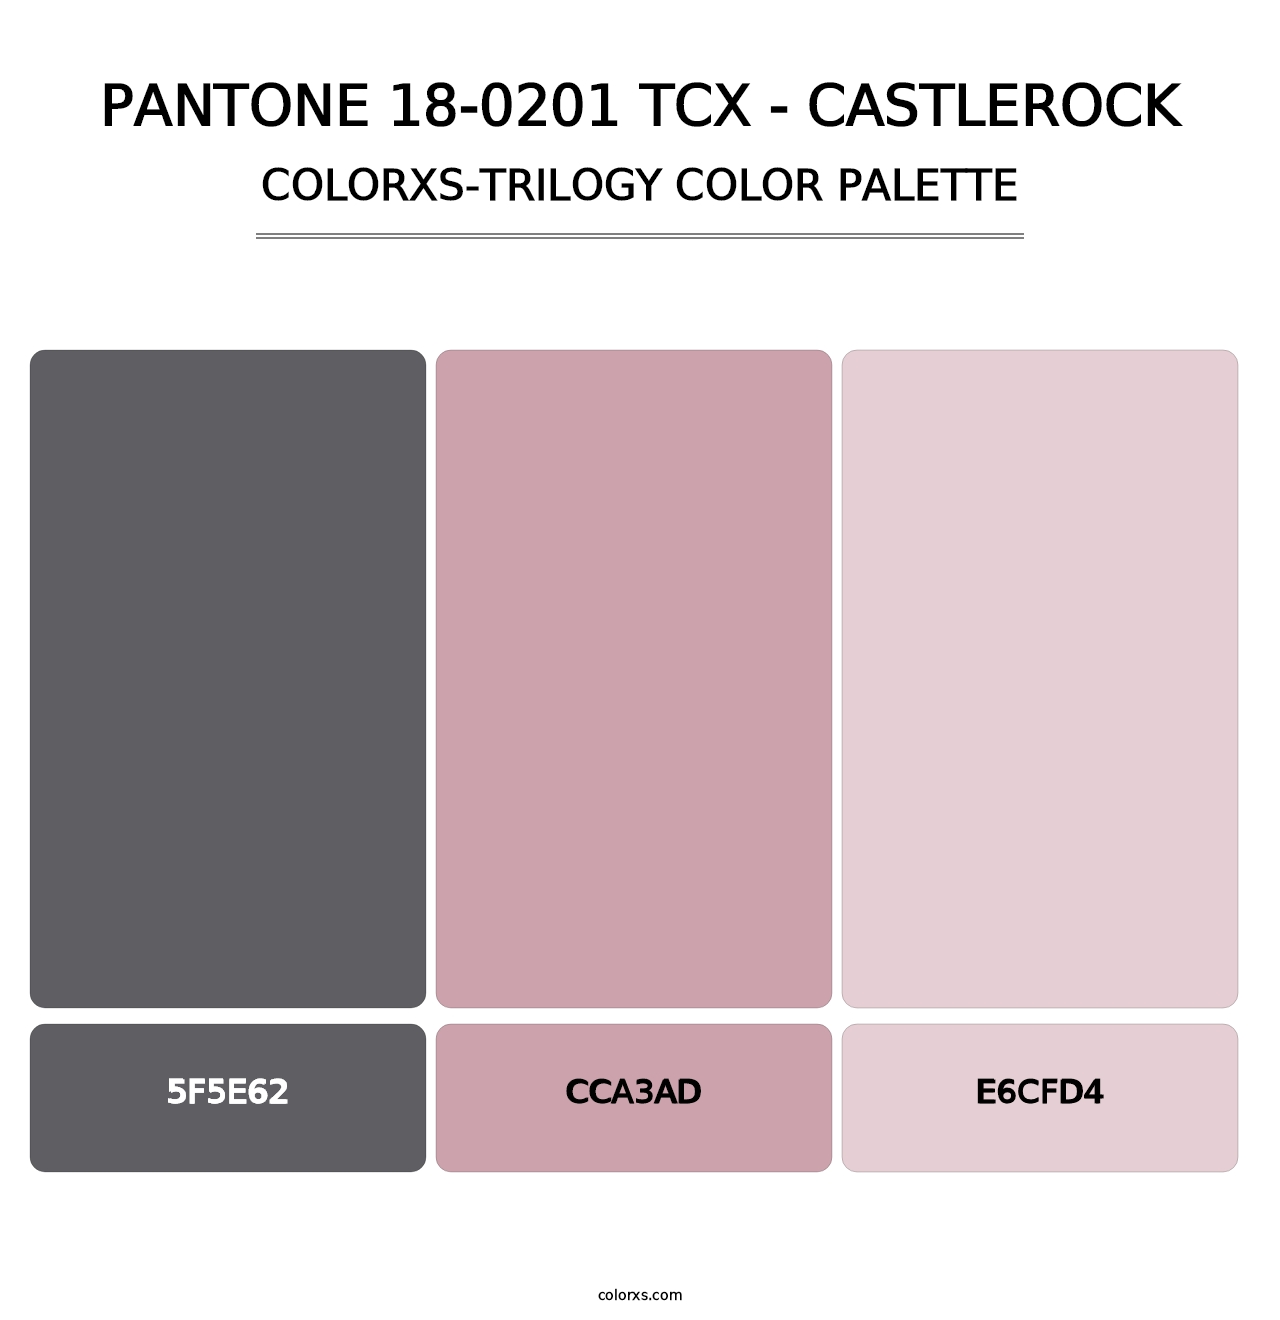 PANTONE 18-0201 TCX - Castlerock - Colorxs Trilogy Palette